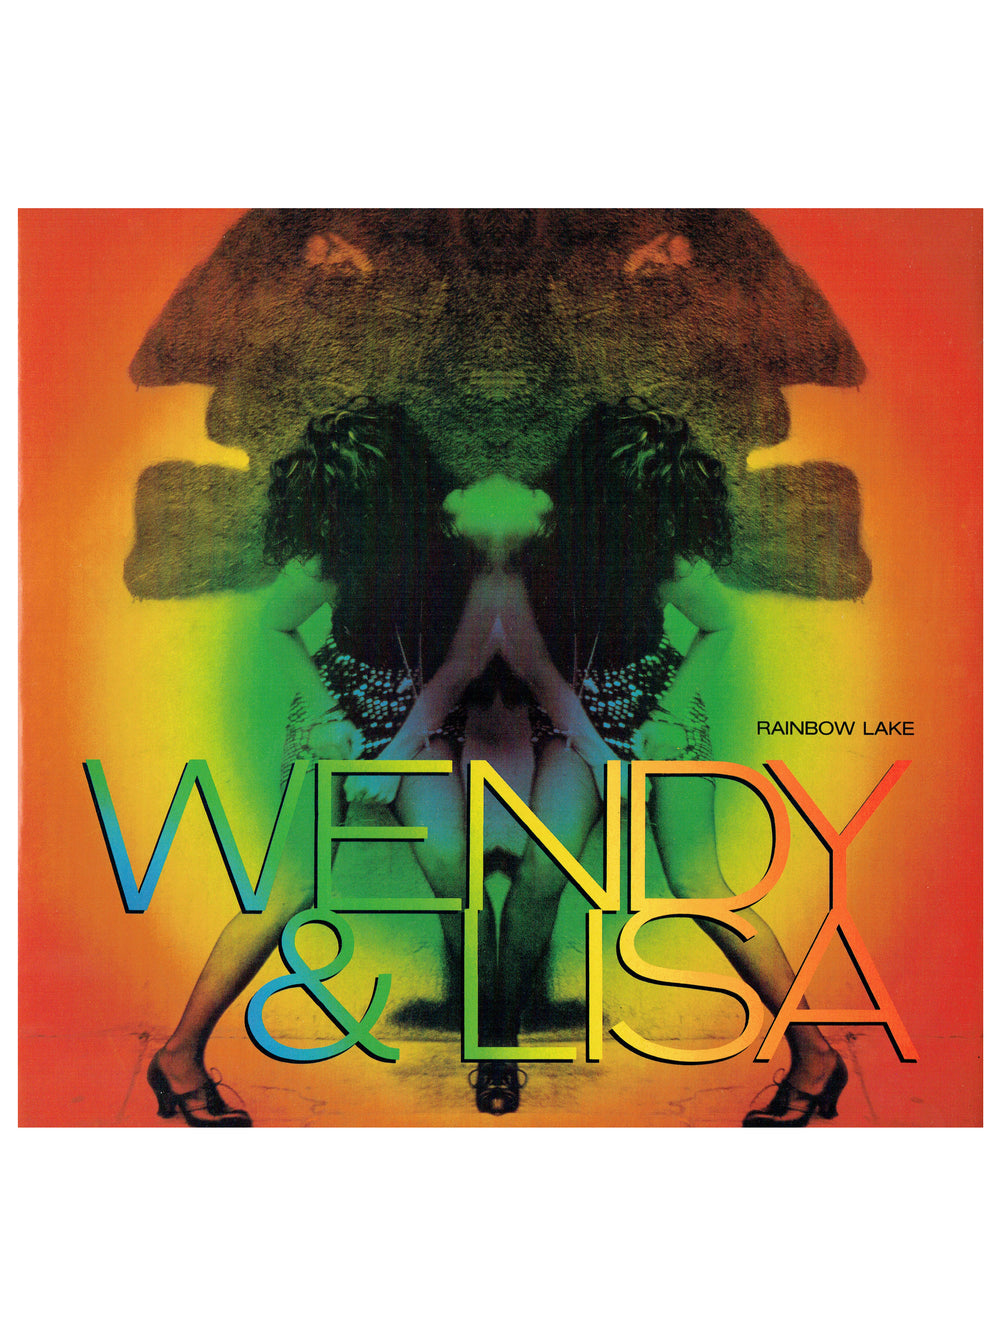 Prince – Wendy & Lisa Rainbow Lake Vinyl 12 " Single Boxed Poster UK Preloved: 1990